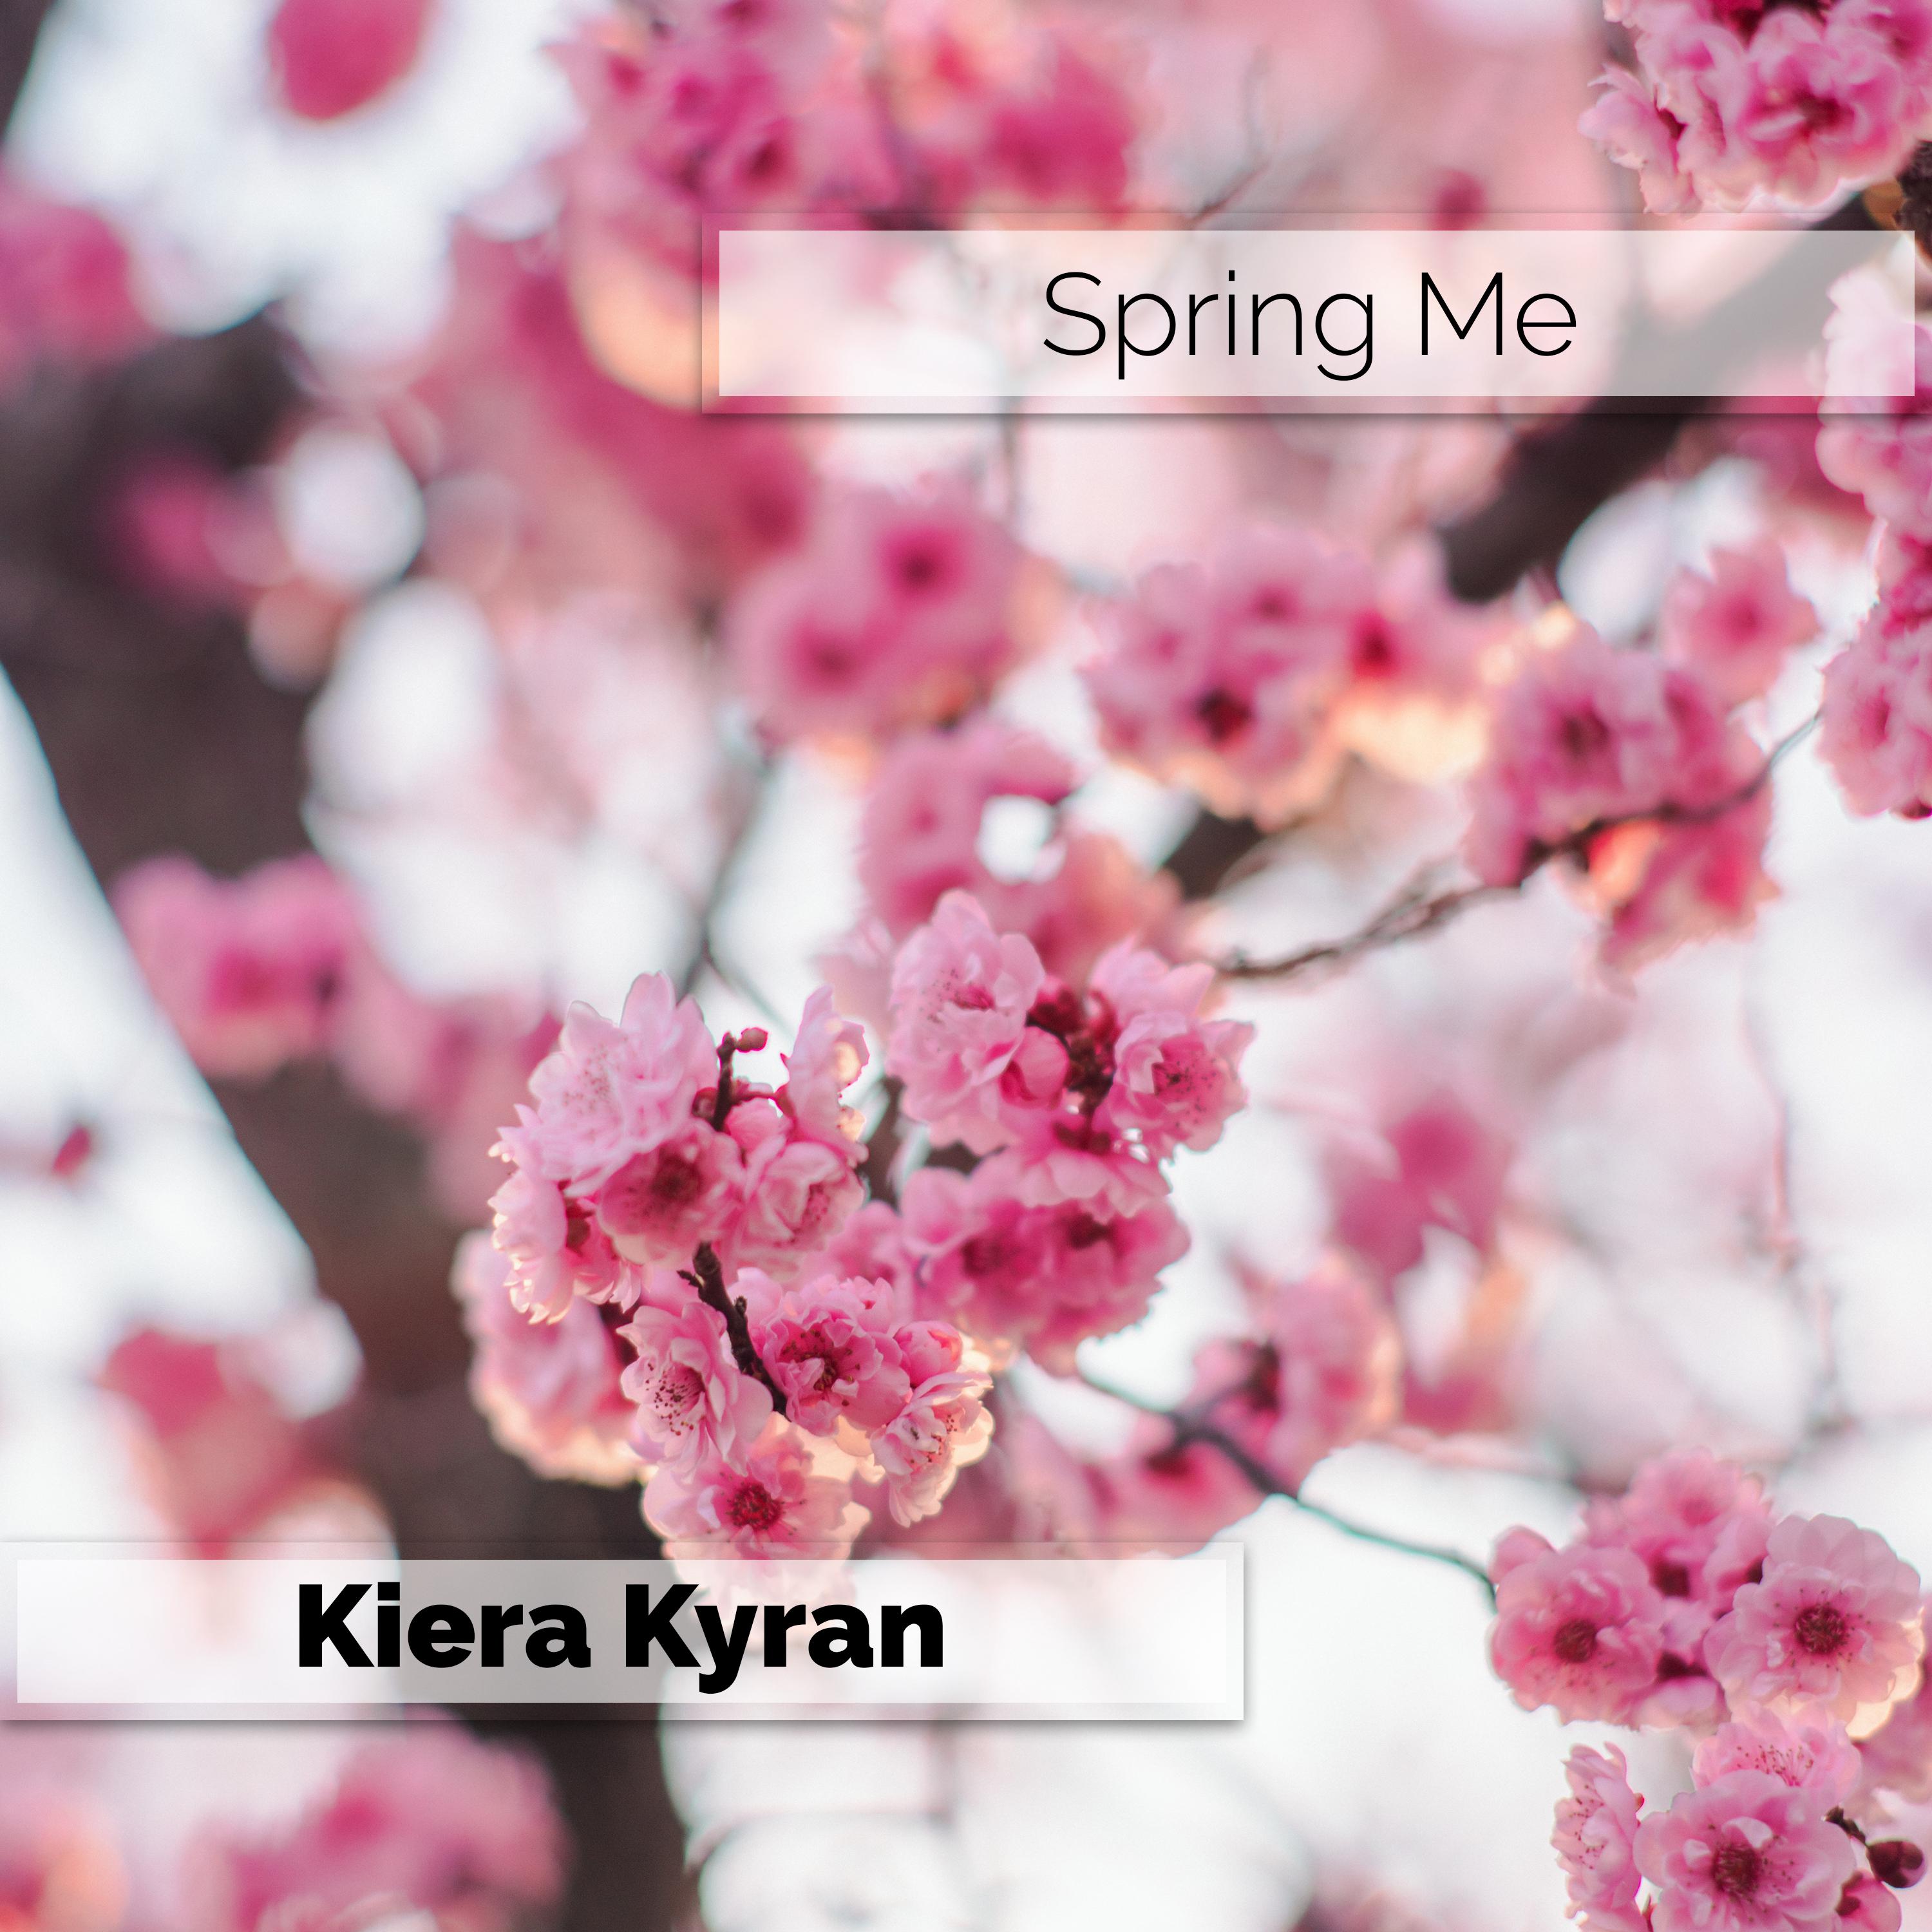 Kiera Kyran - Like That (Original Fast)